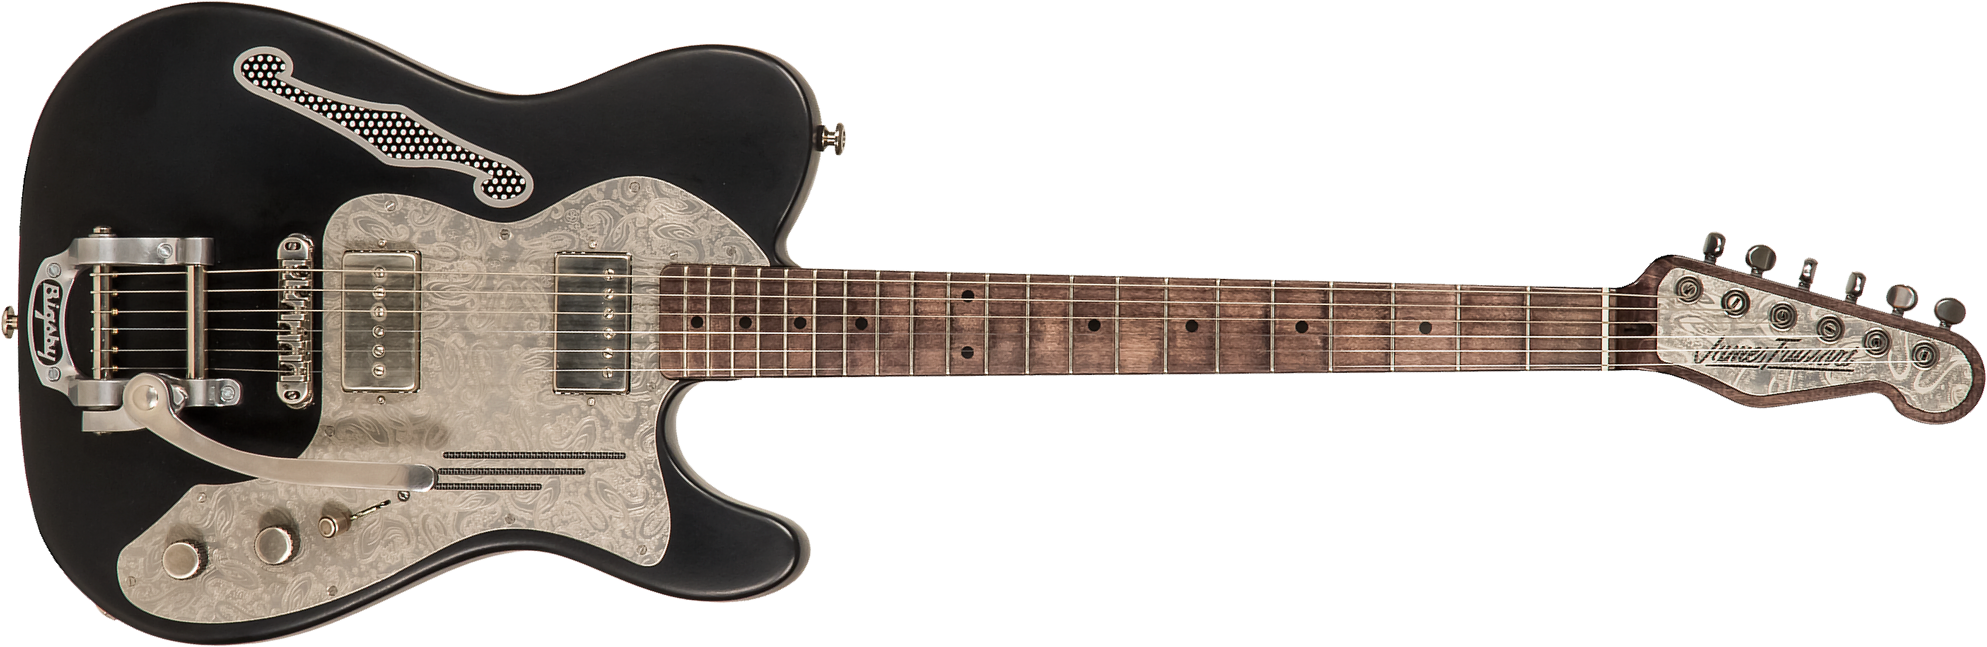 James Trussart Deluxe Steelcaster Perf.back P90h Bigsby Mn #21132 - Antique Silver Paisley Engraved Satin Black - Televorm elektrische gitaar - Main p